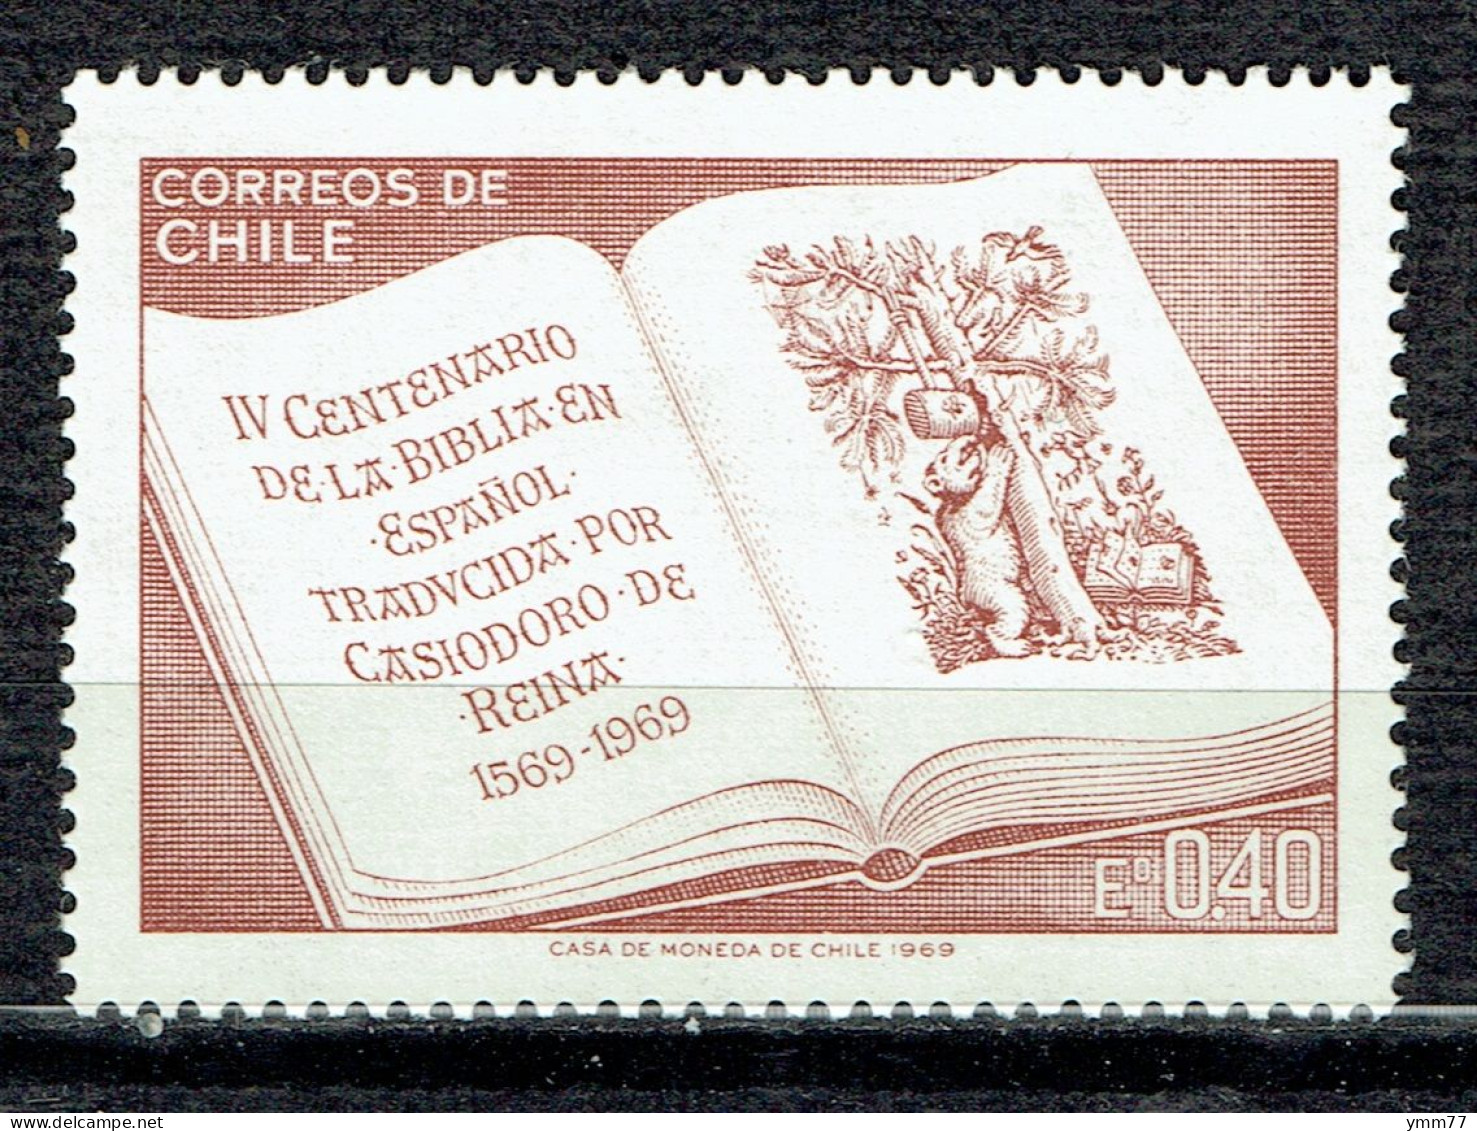 4ème Centenaire De La Bible En Espagnol Traduite Par Casiodoro De Reina - Chile